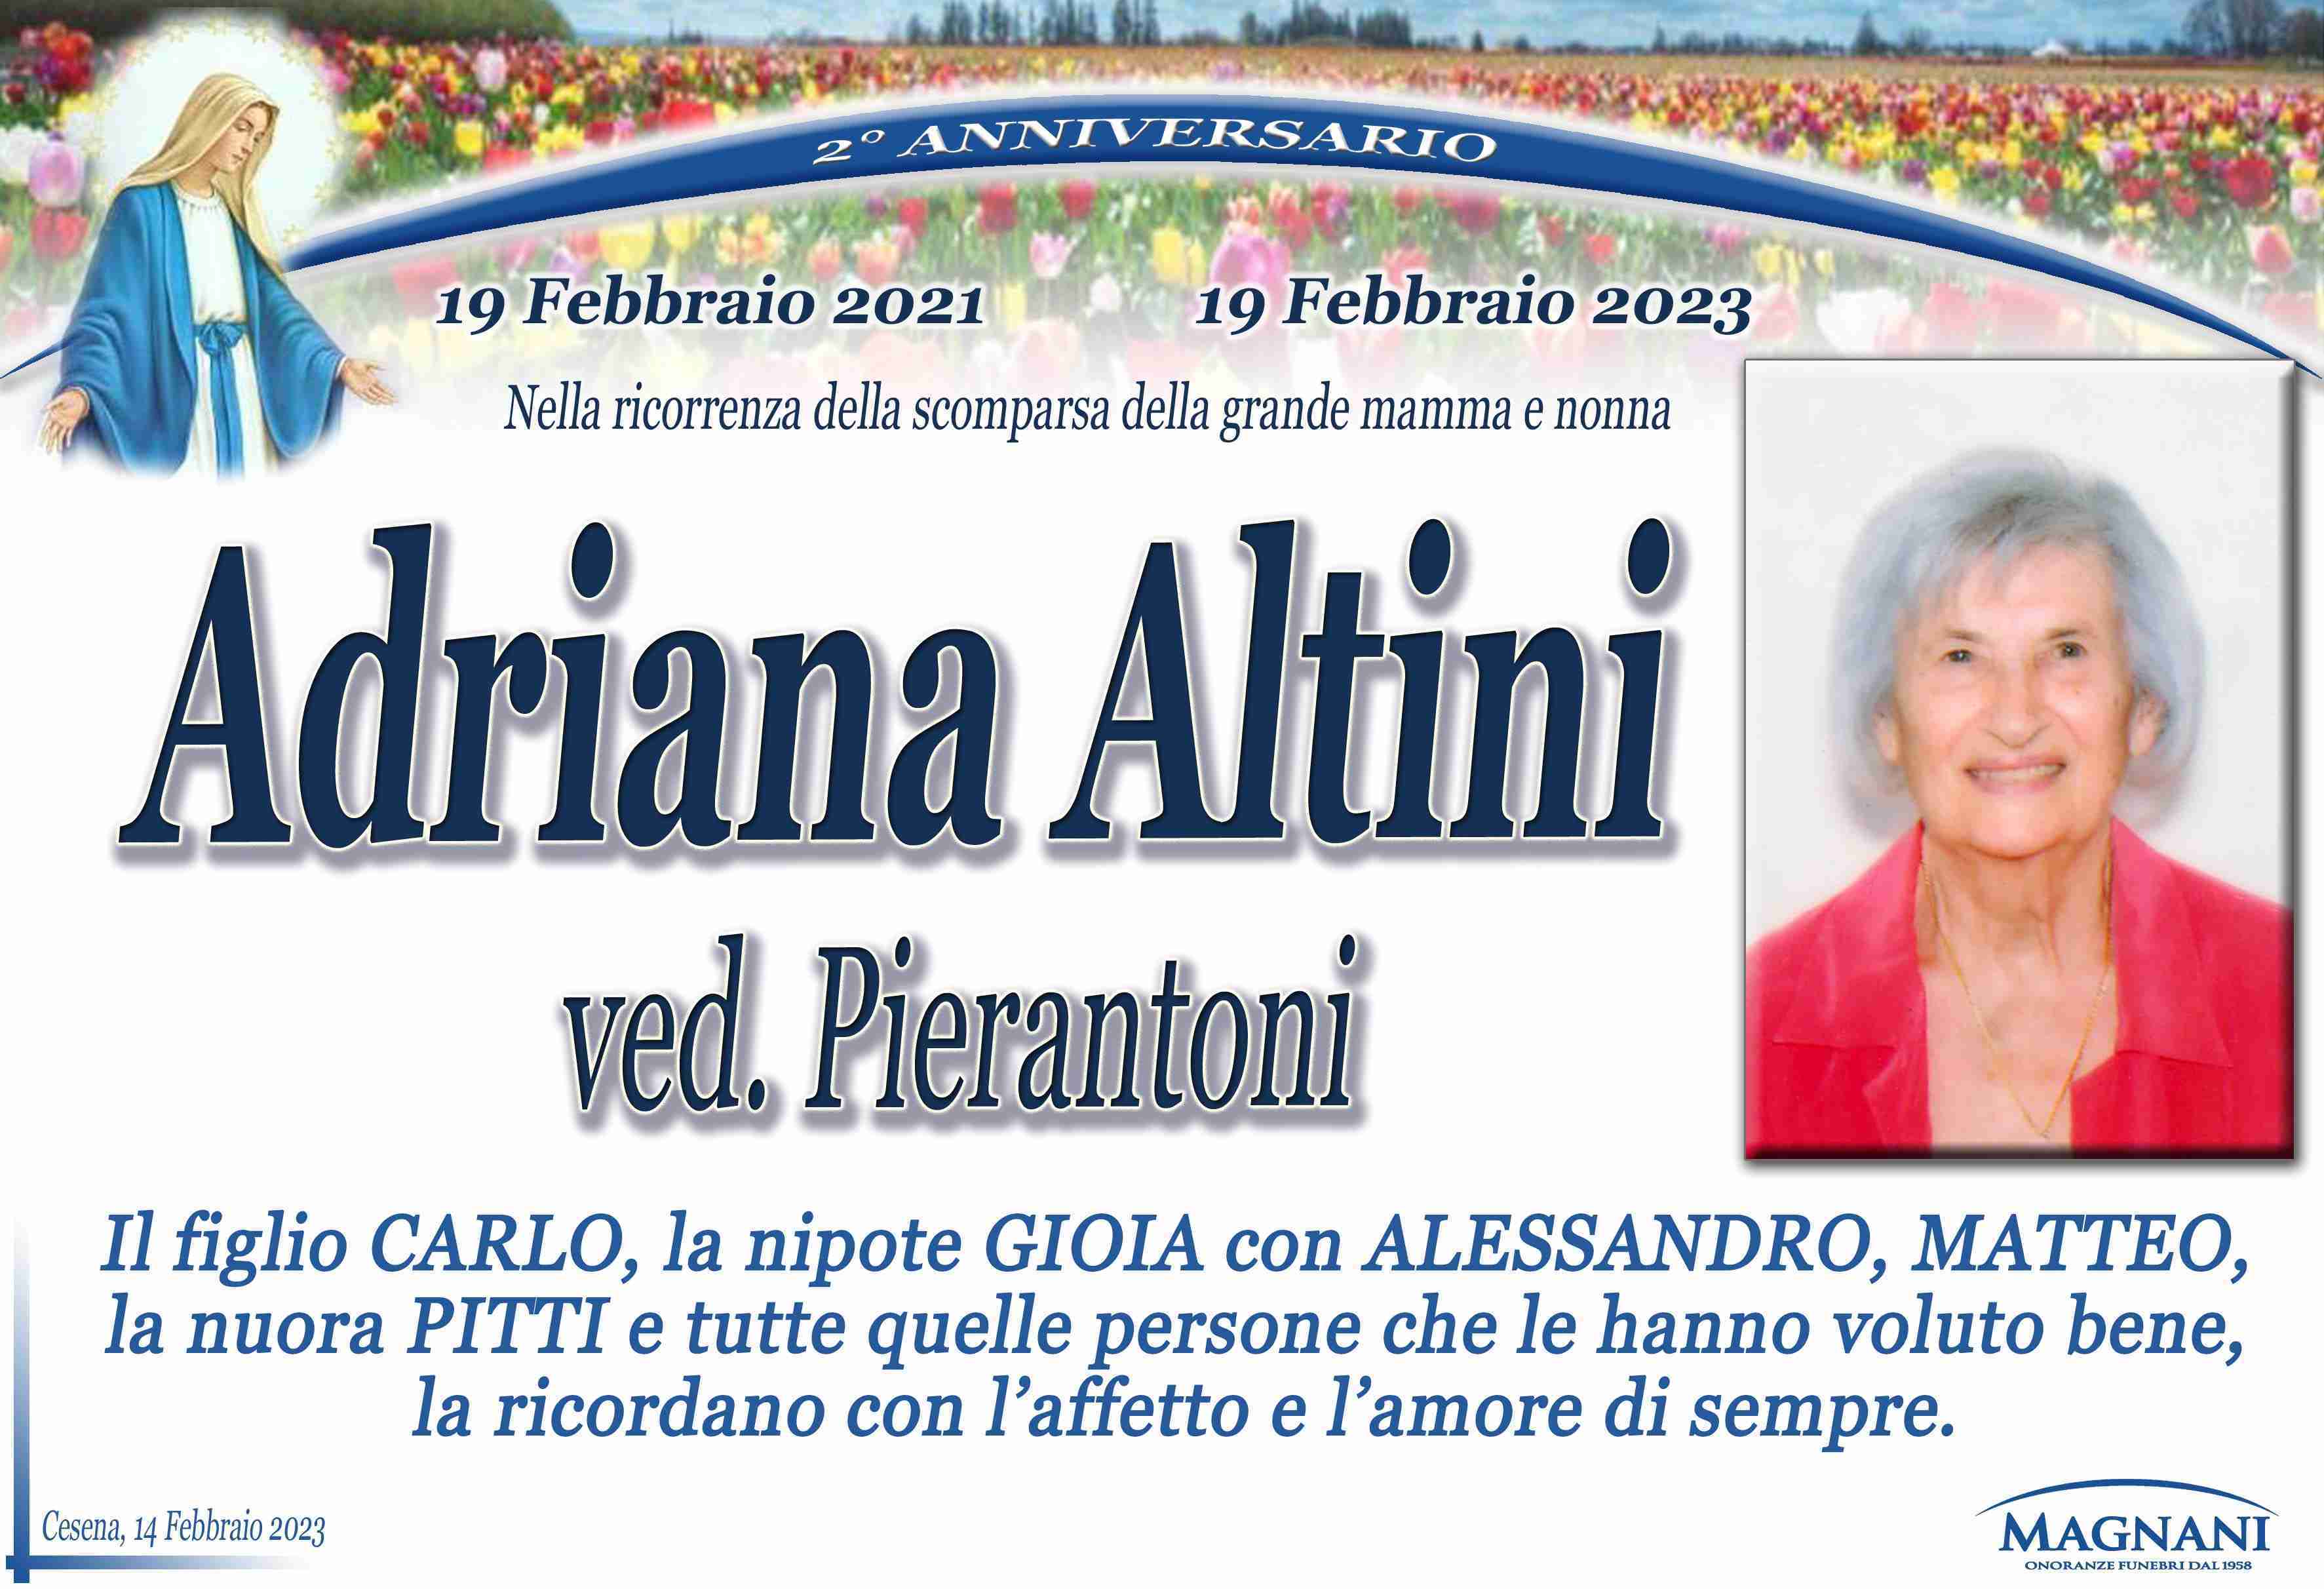 Adriana Altini